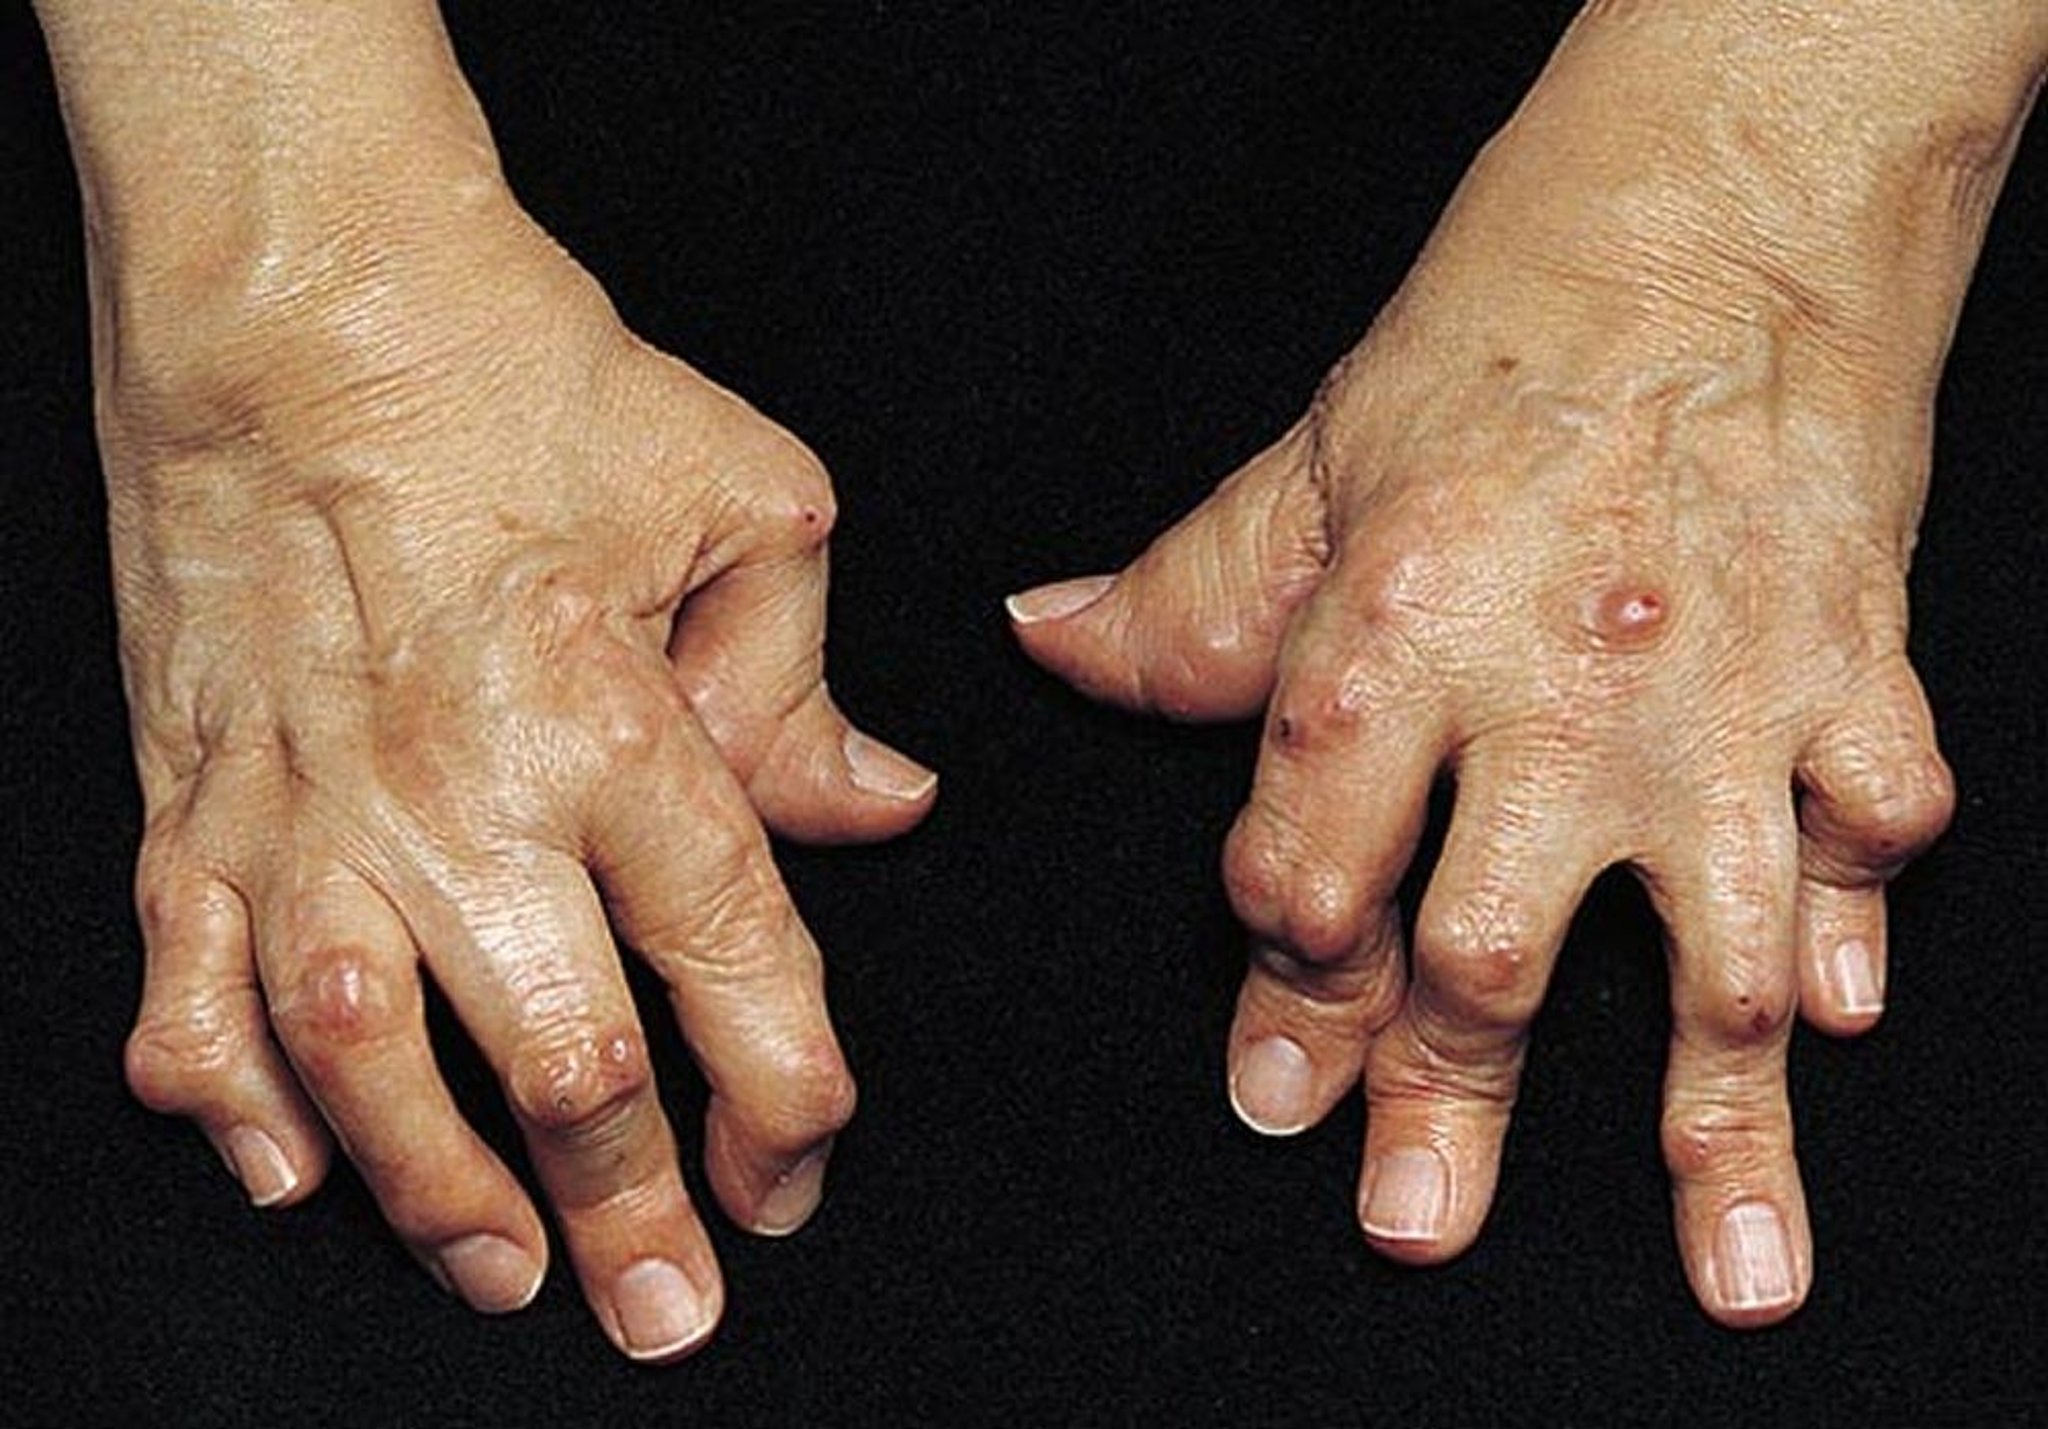 Knopflochdeformität bei Rheumatoider Arthritis